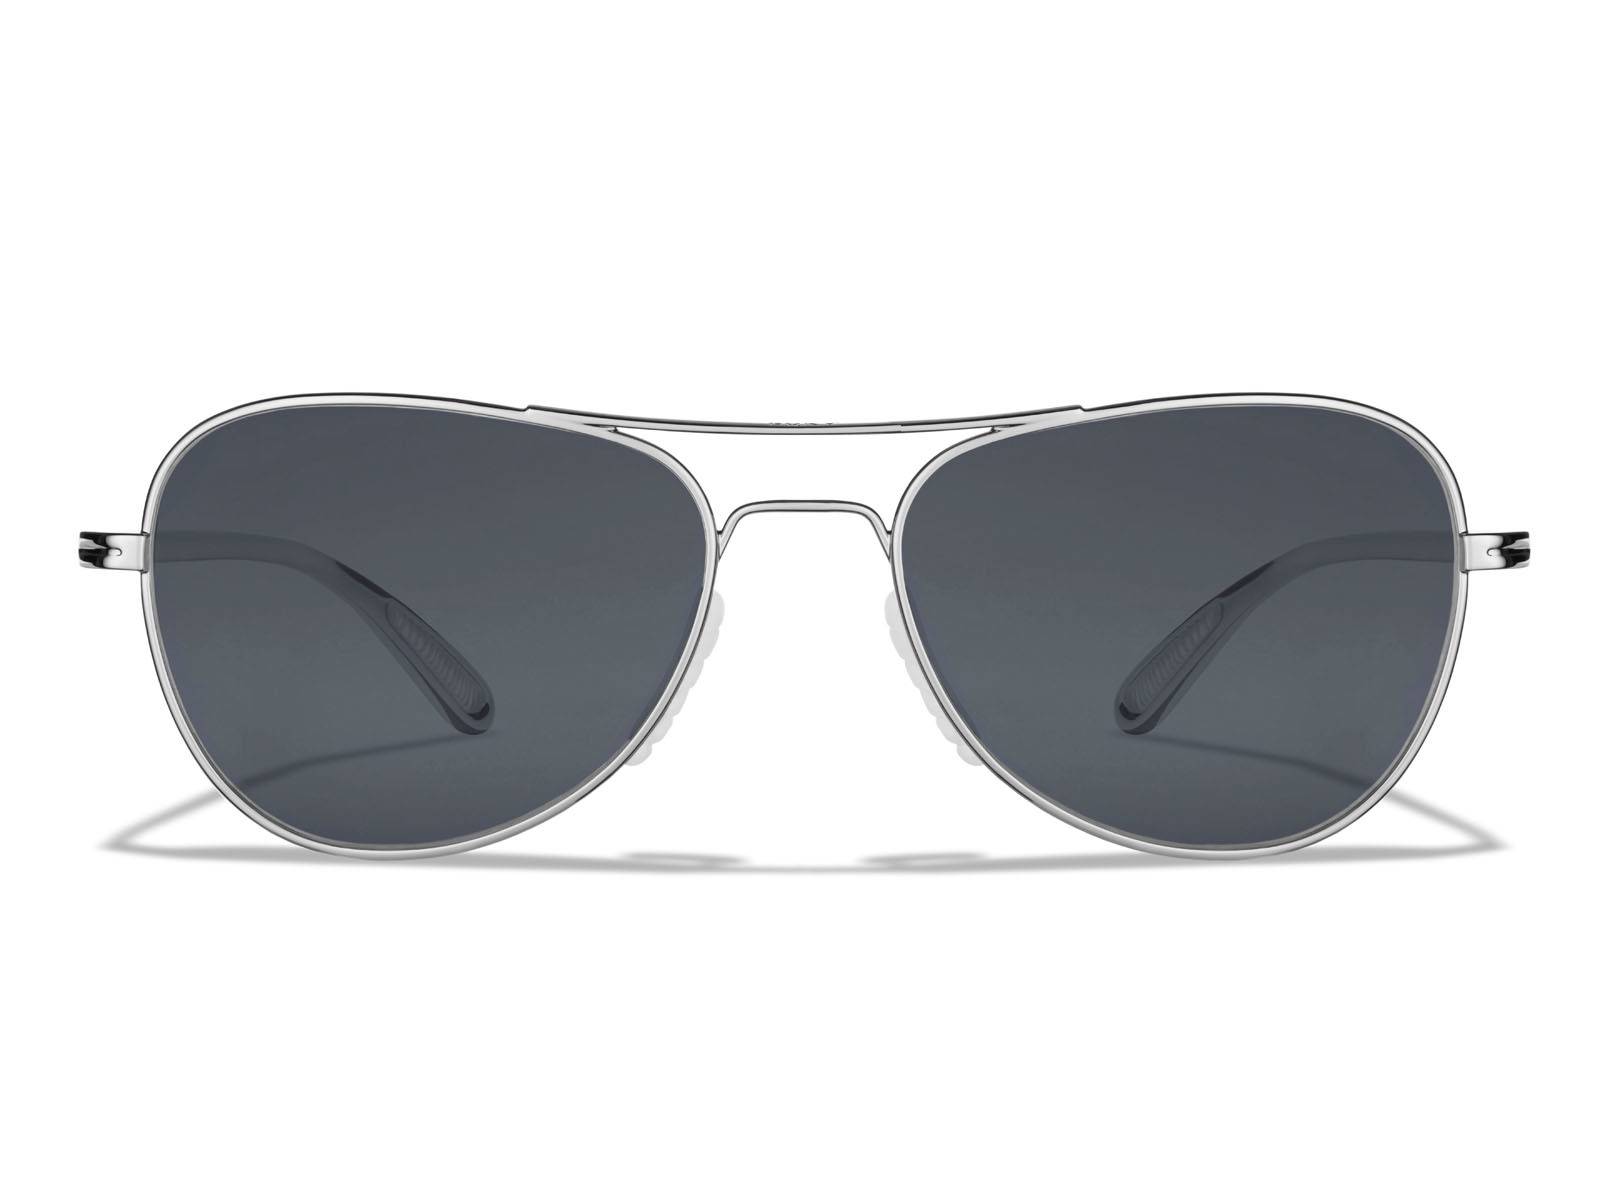 Rio Titanium Prescription Sunglasses